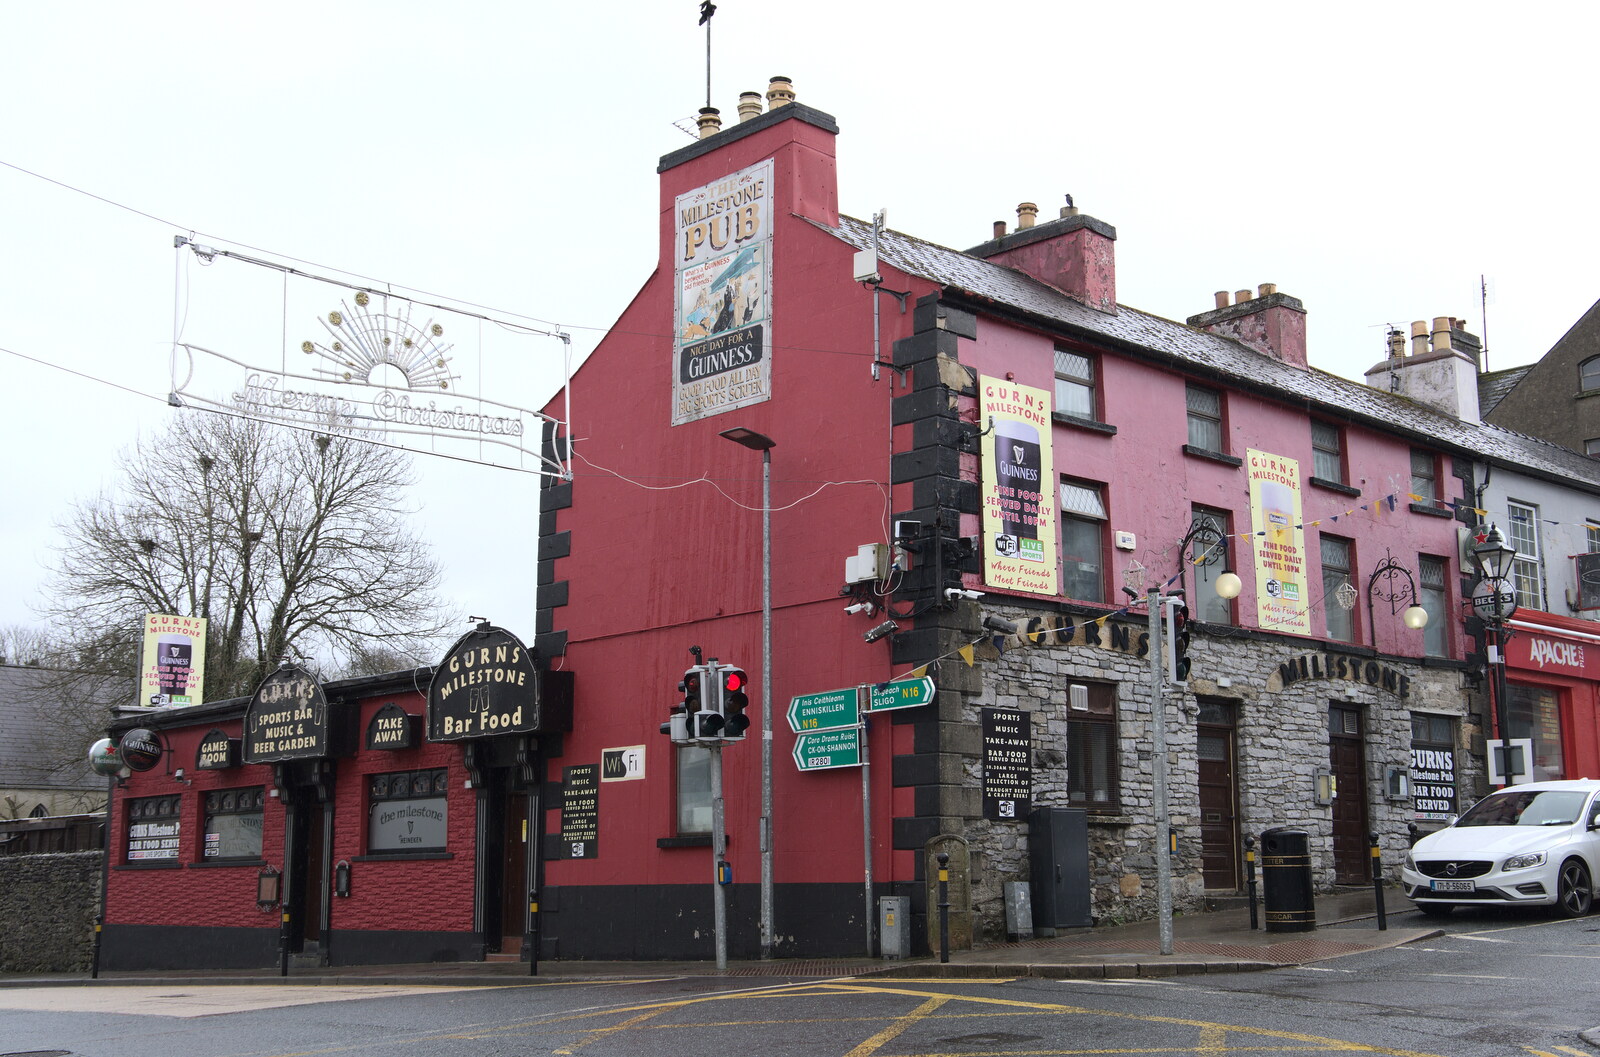 Gurn's Milestone pub is closed yet again from Manorhamilton and Bundoran, Leitrim and Donegal, Ireland - 16th April 2022